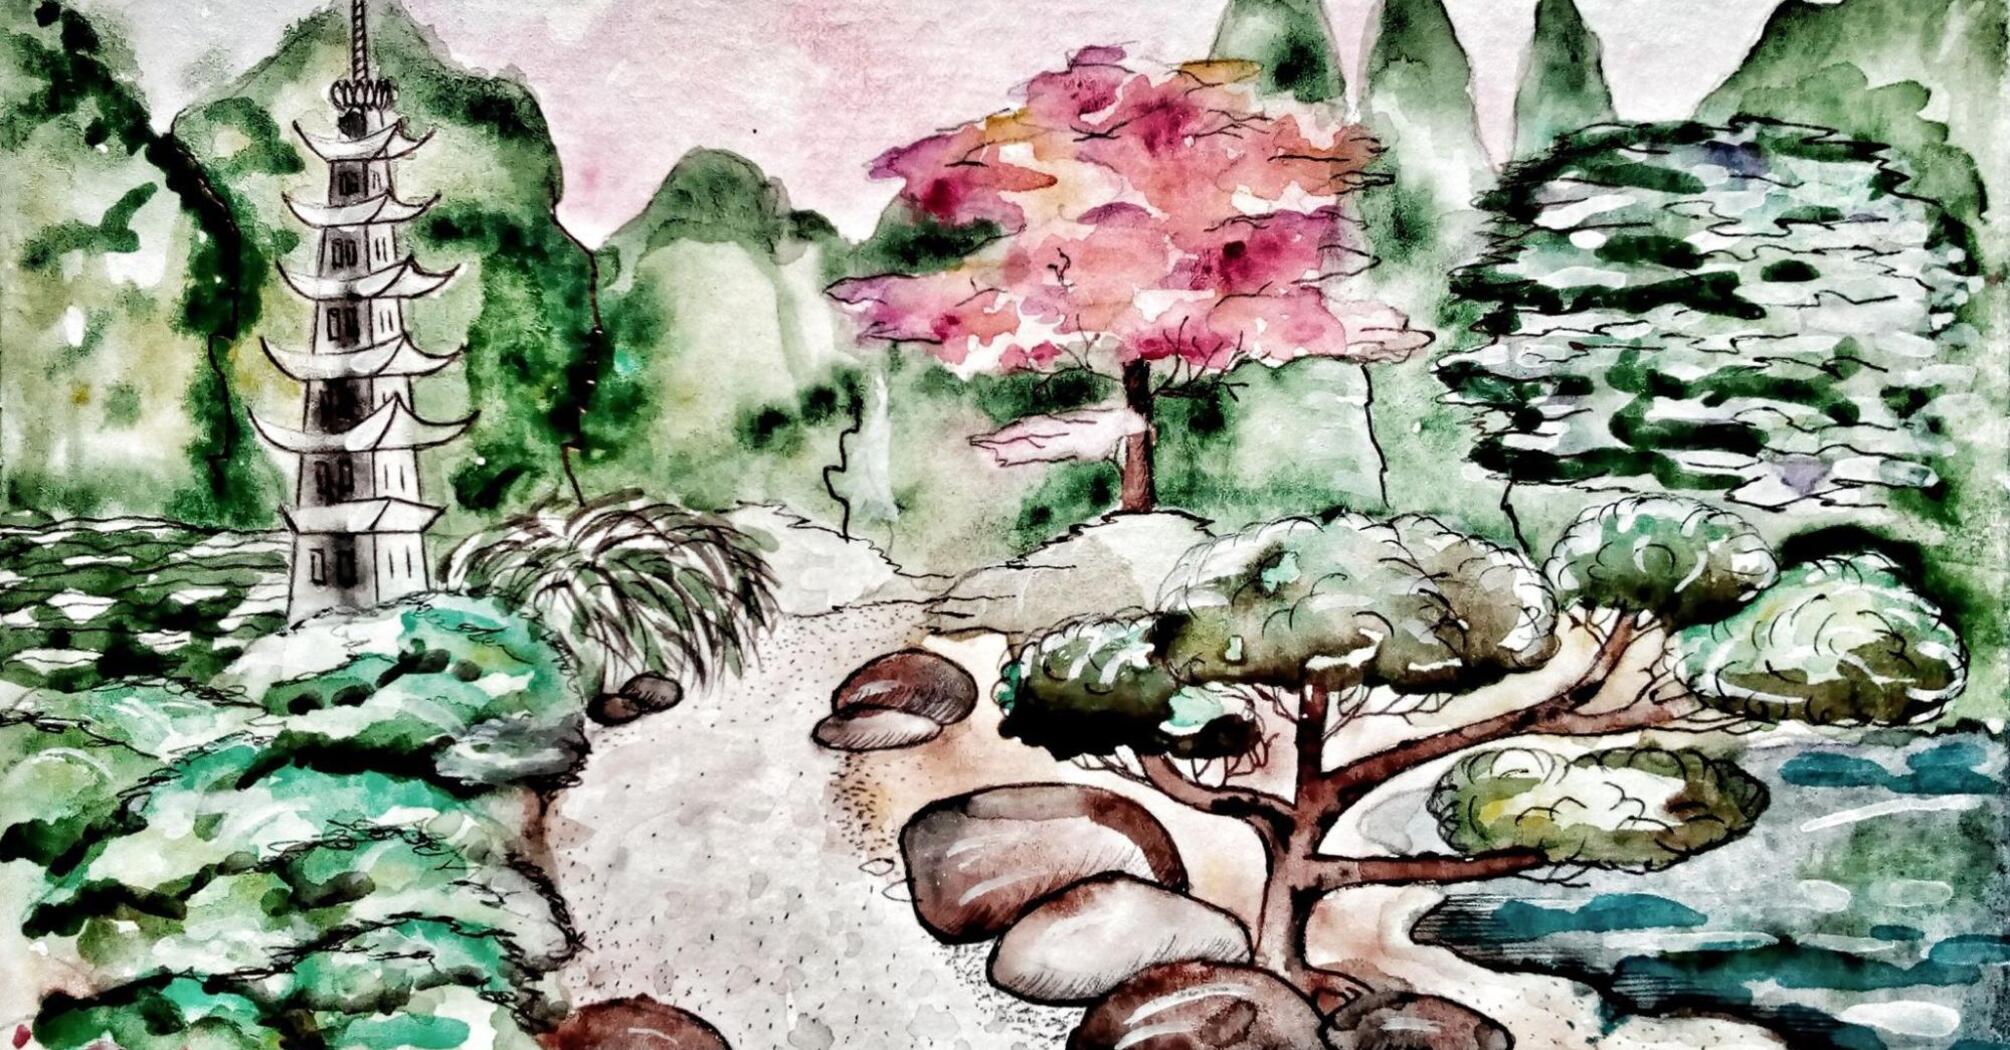 Japanese landscape in watercolor